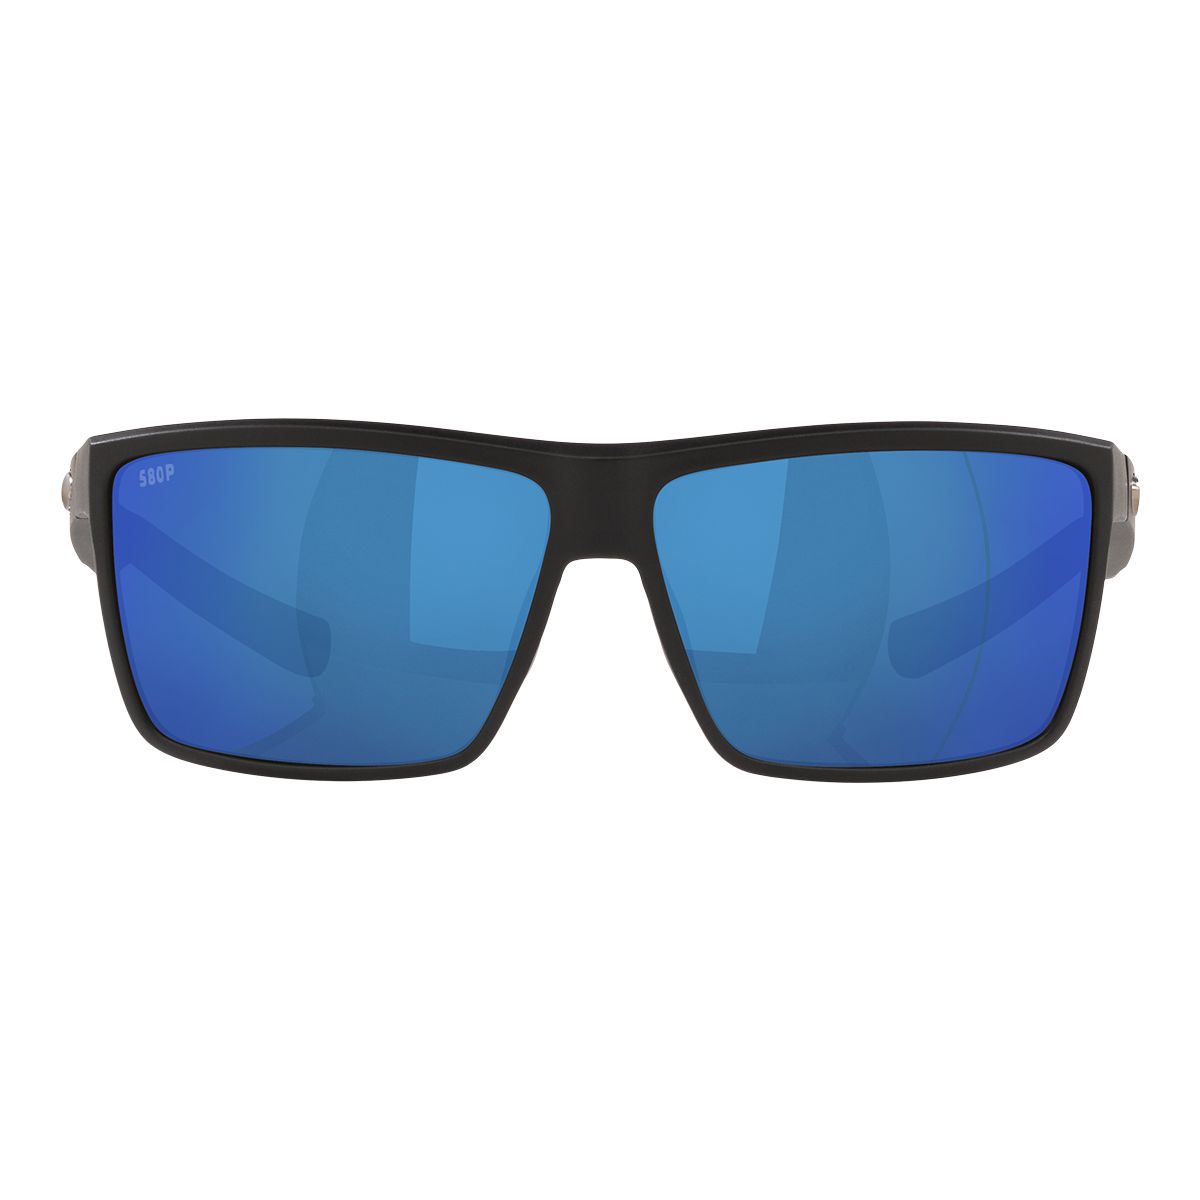 Image of Costa Men's/Women's Rinconcito Rectangular Sunglasses Polarized